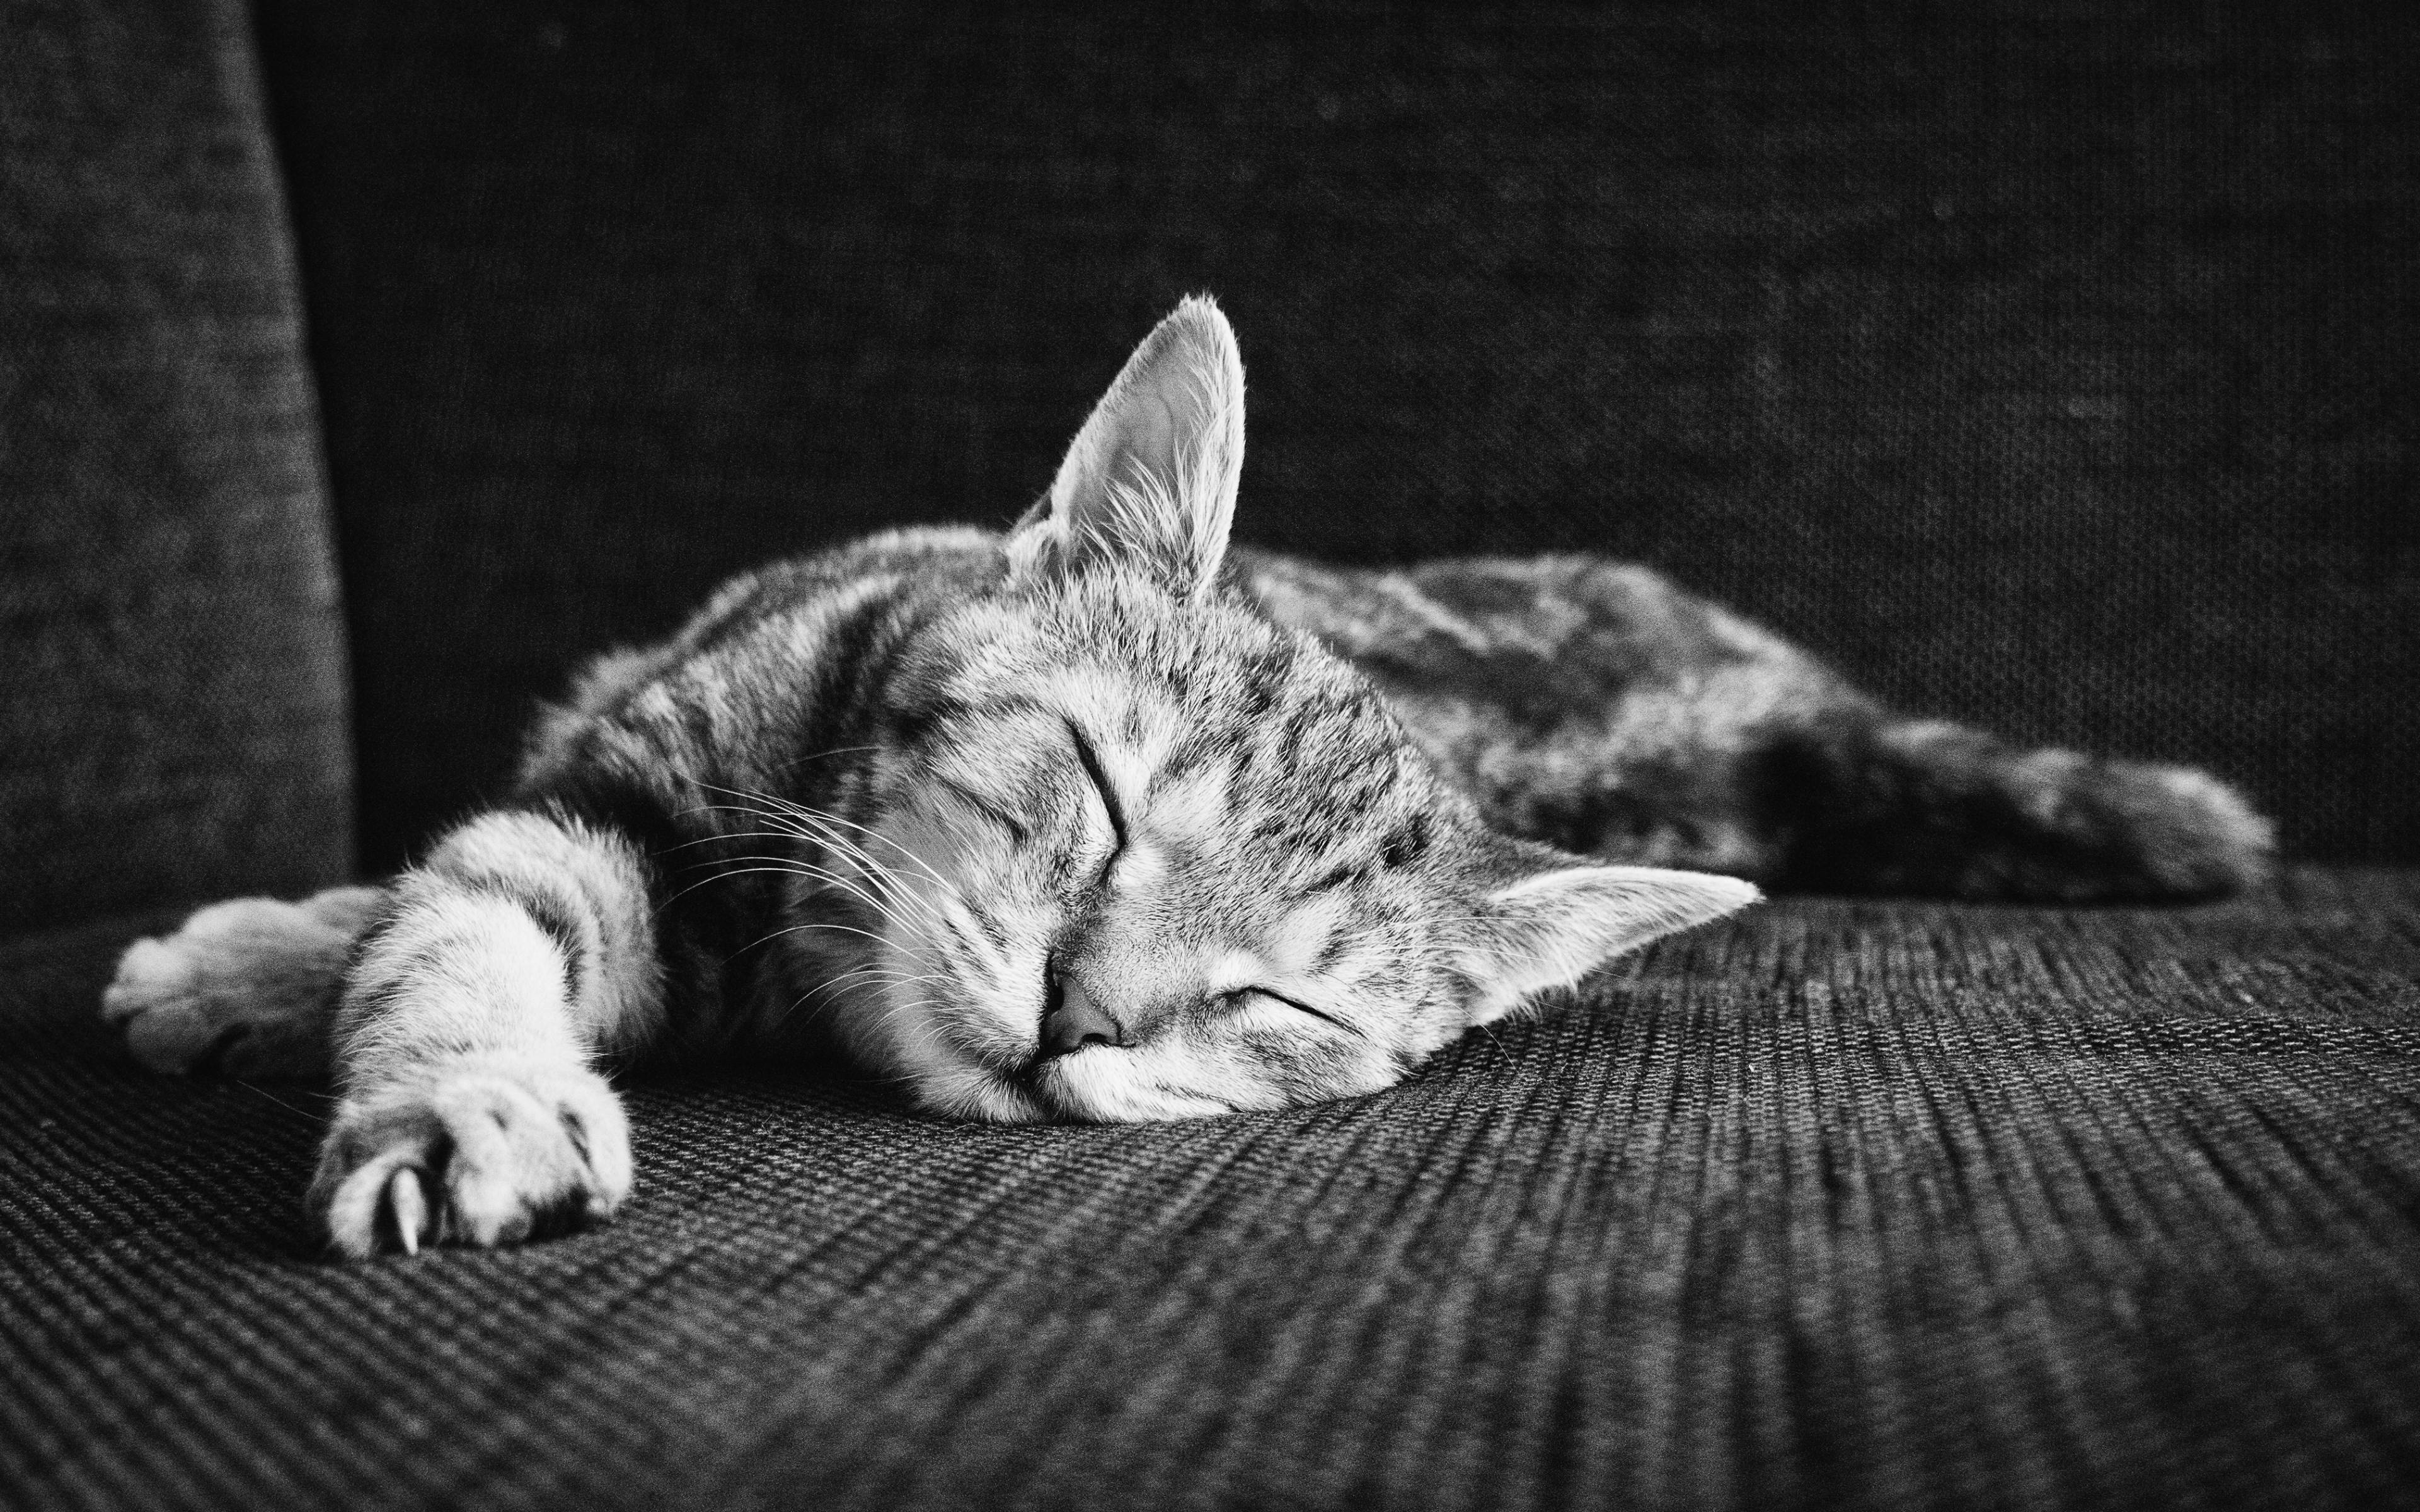 Zen of sleeping kitten wallpaper 3840x2400